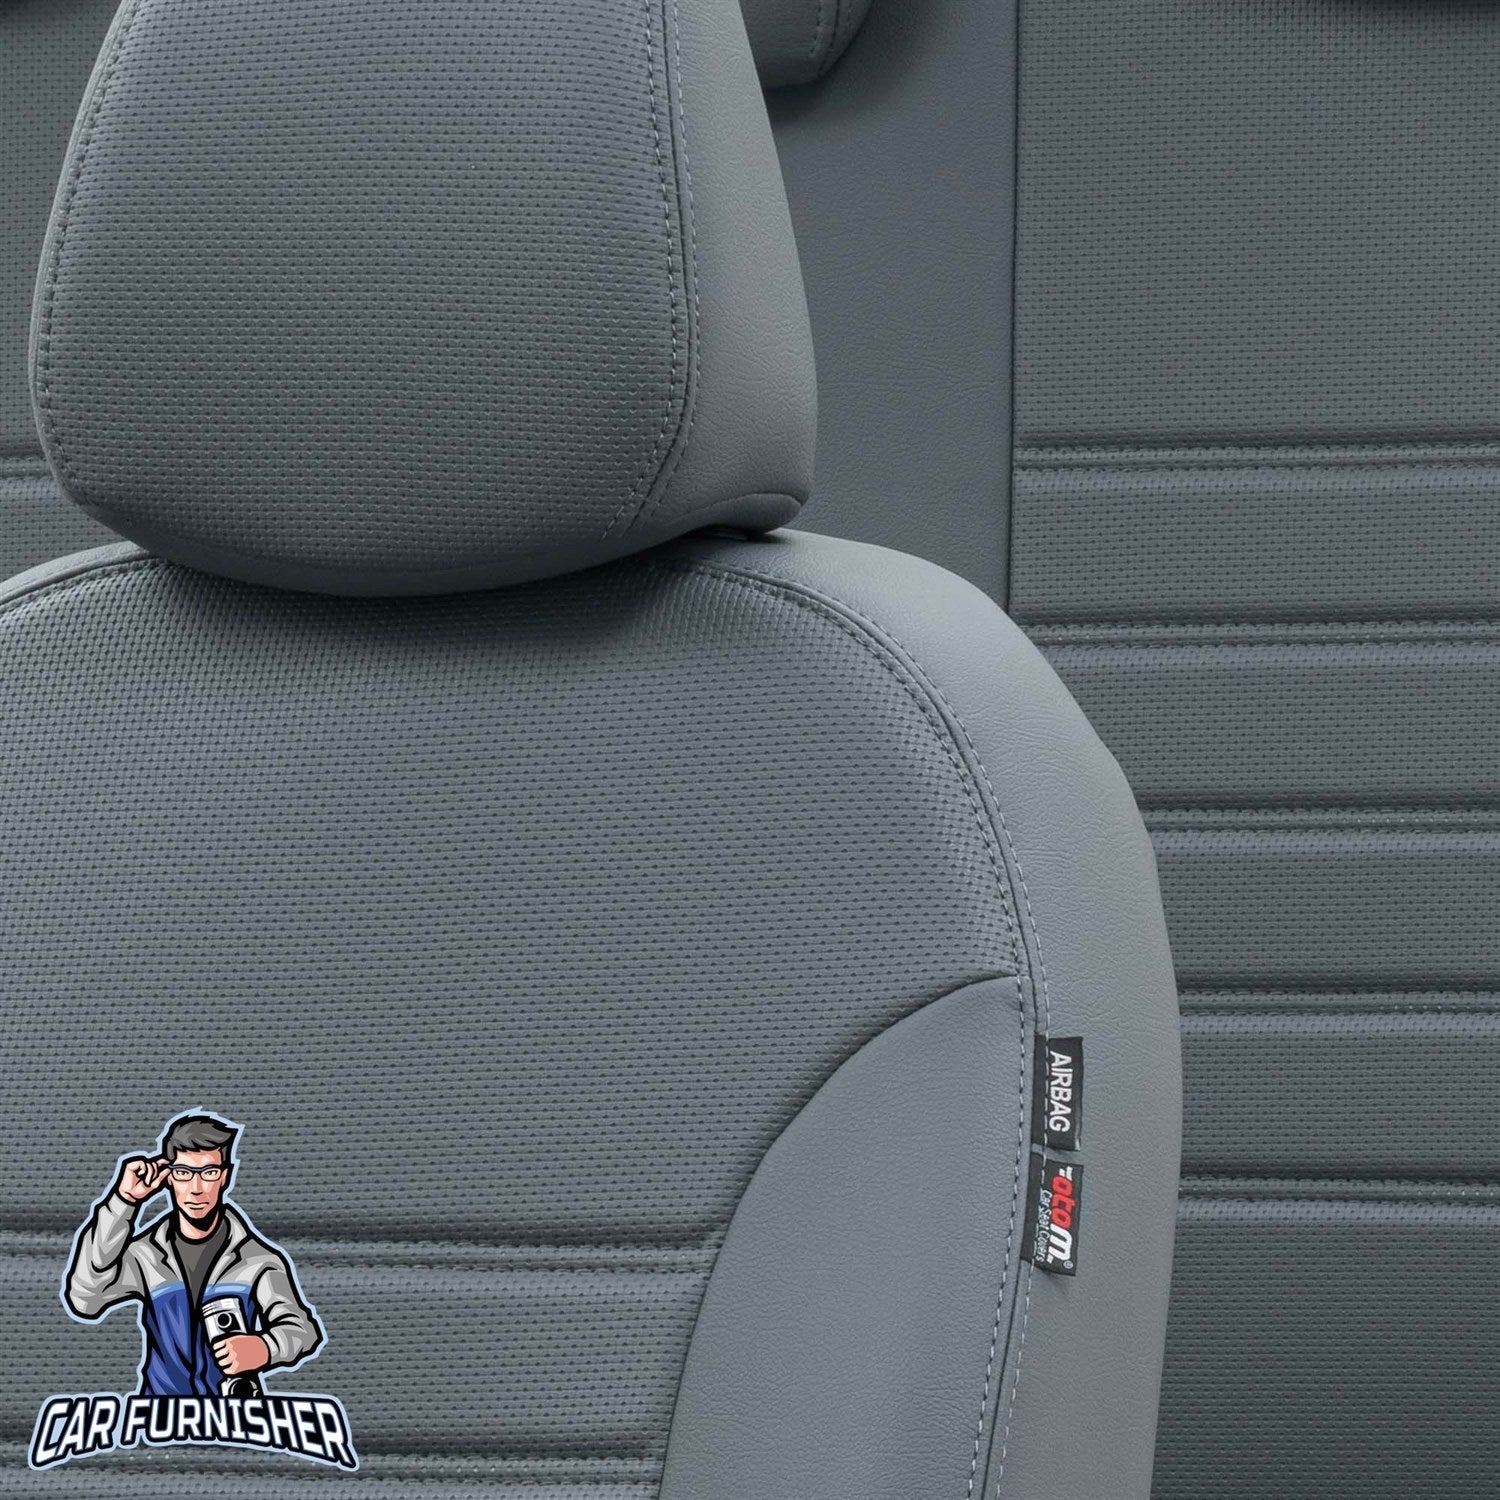 Chery Tiggo Seat Covers New York Leather Design Smoked Leather